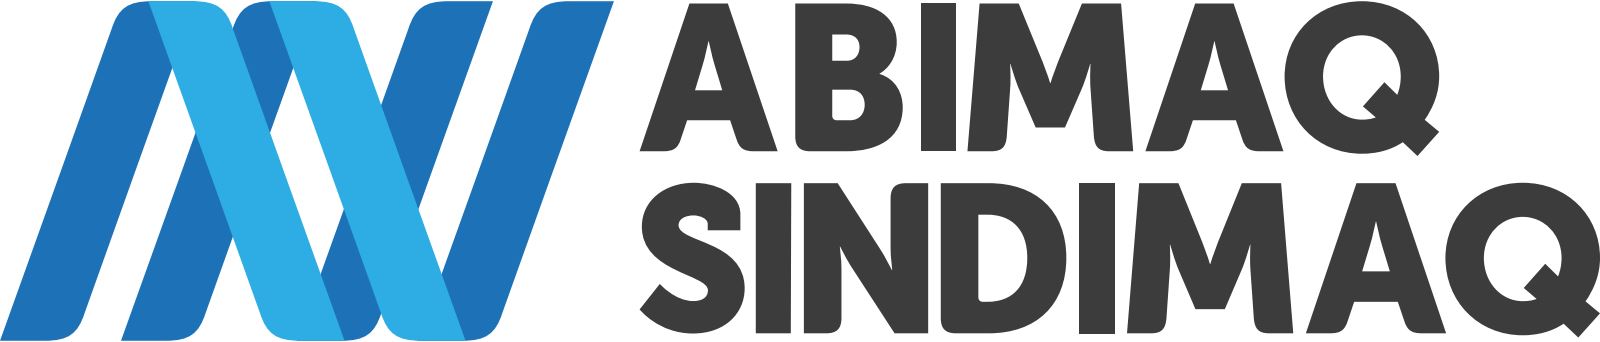 abimaq_logo